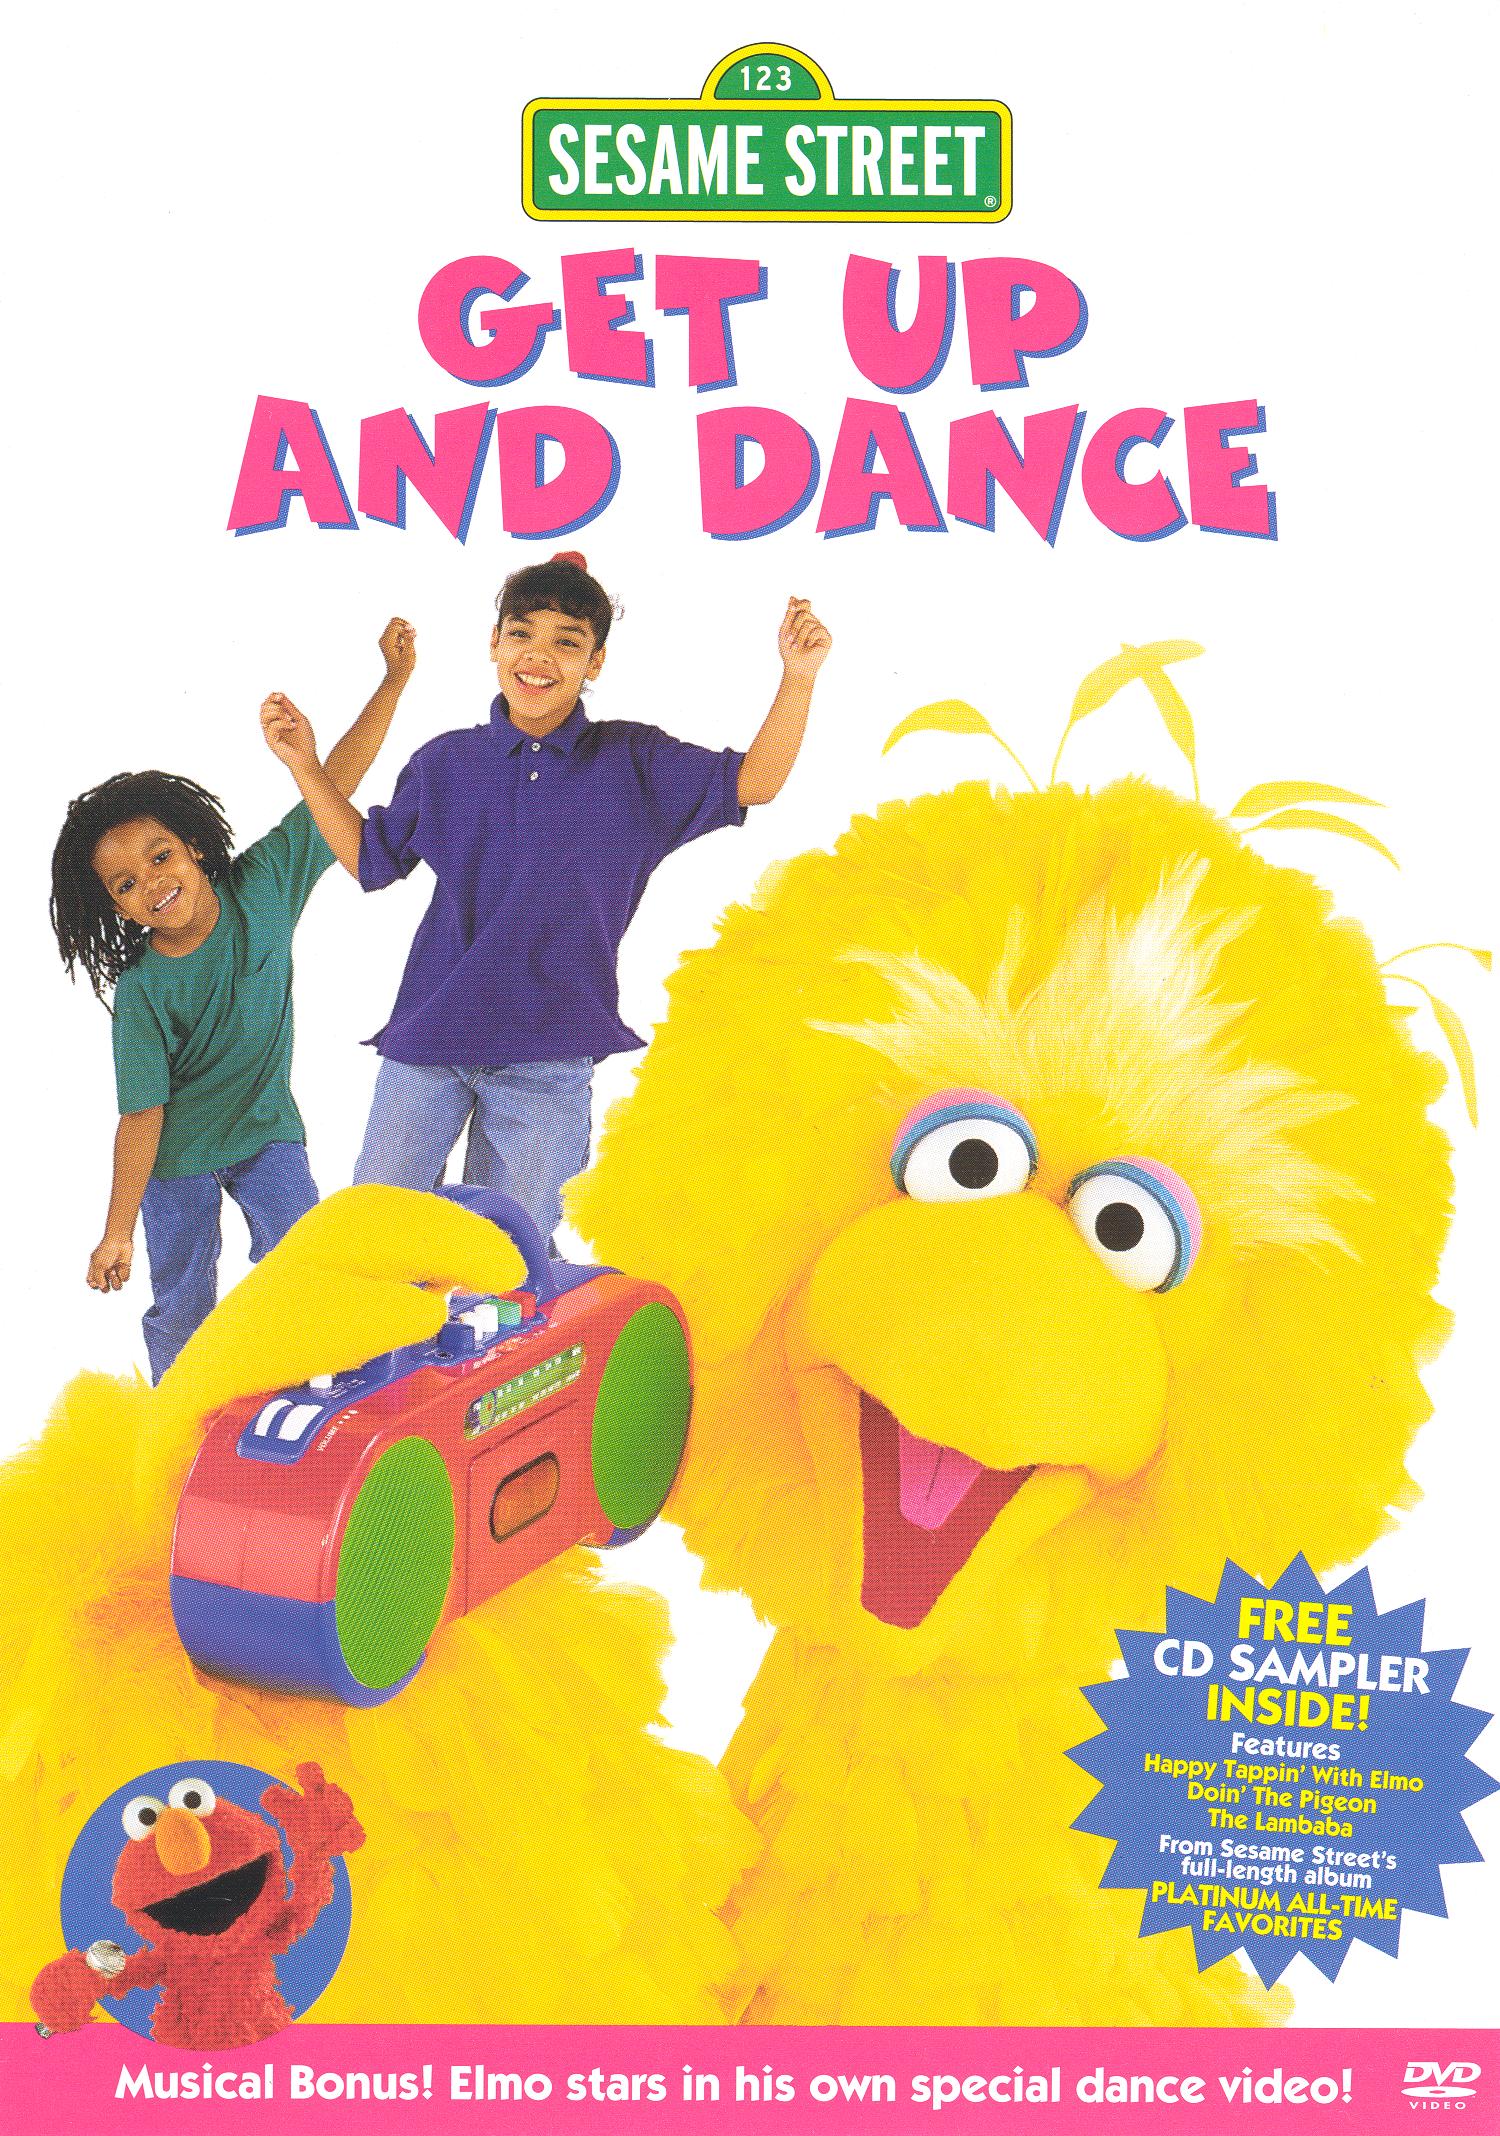  Sesame Street: Get Up and Dance [DVD/CD] [DVD] [1997]